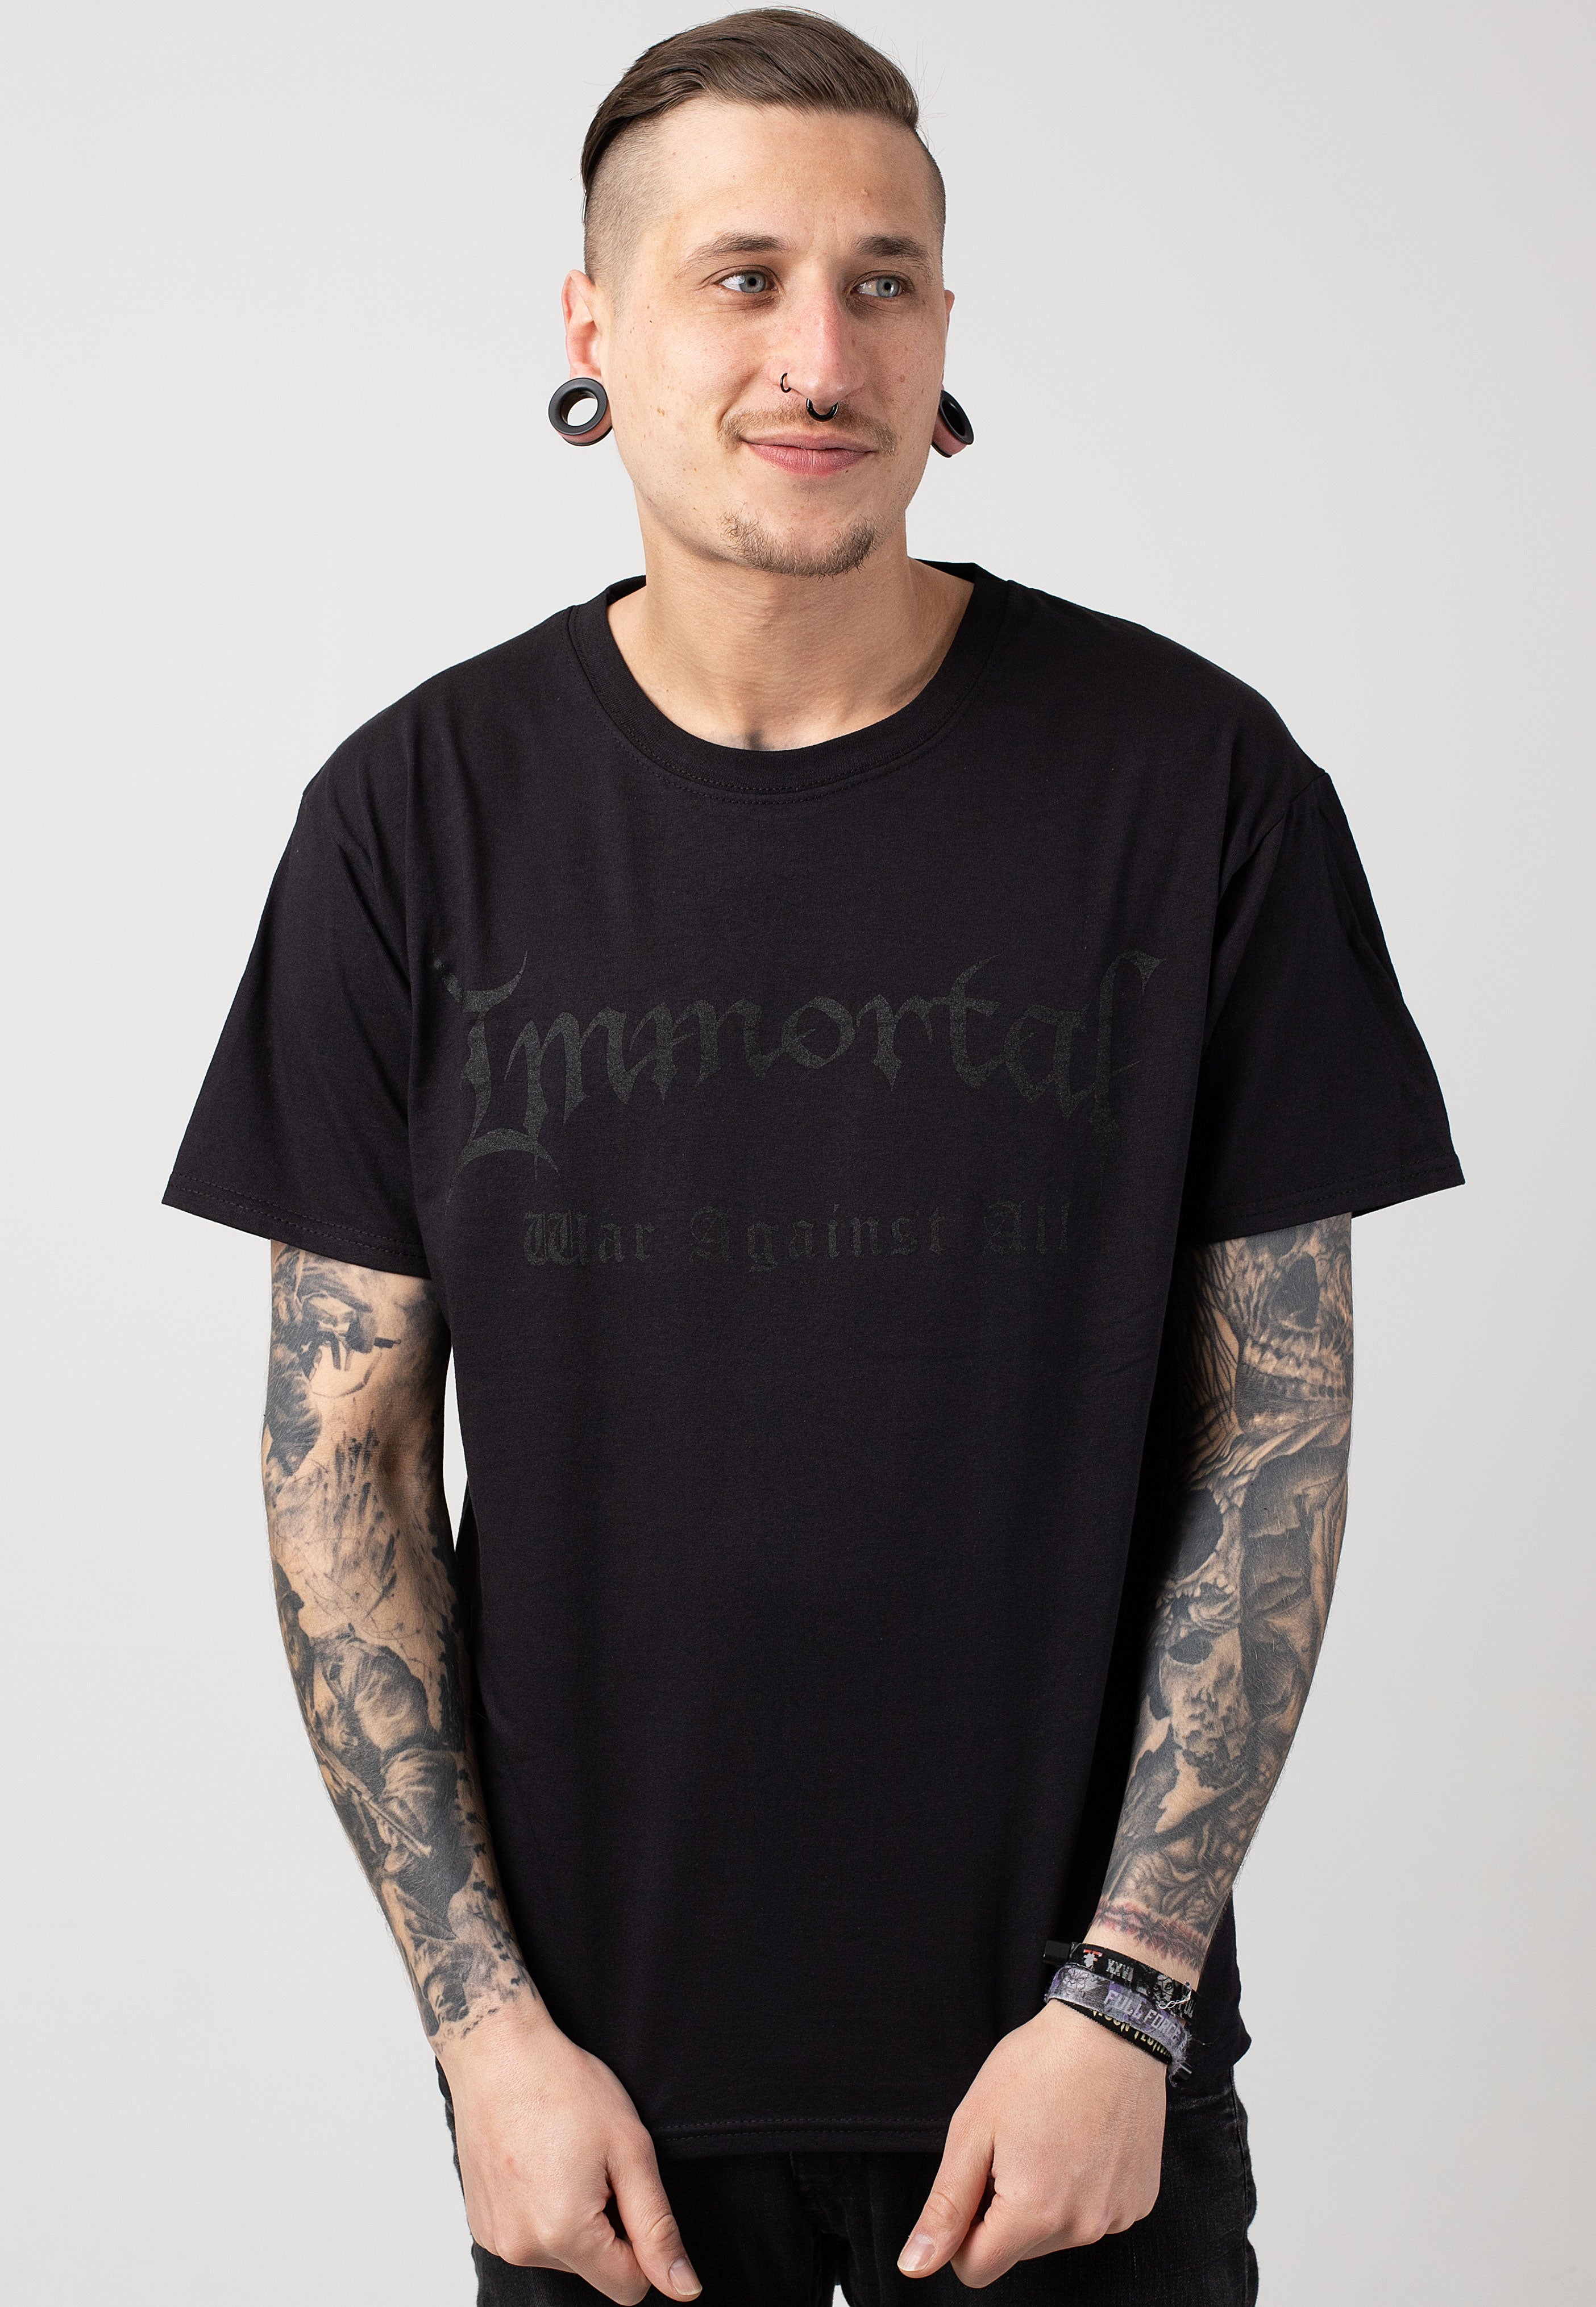 Immortal - War Against All Black - T-Shirt